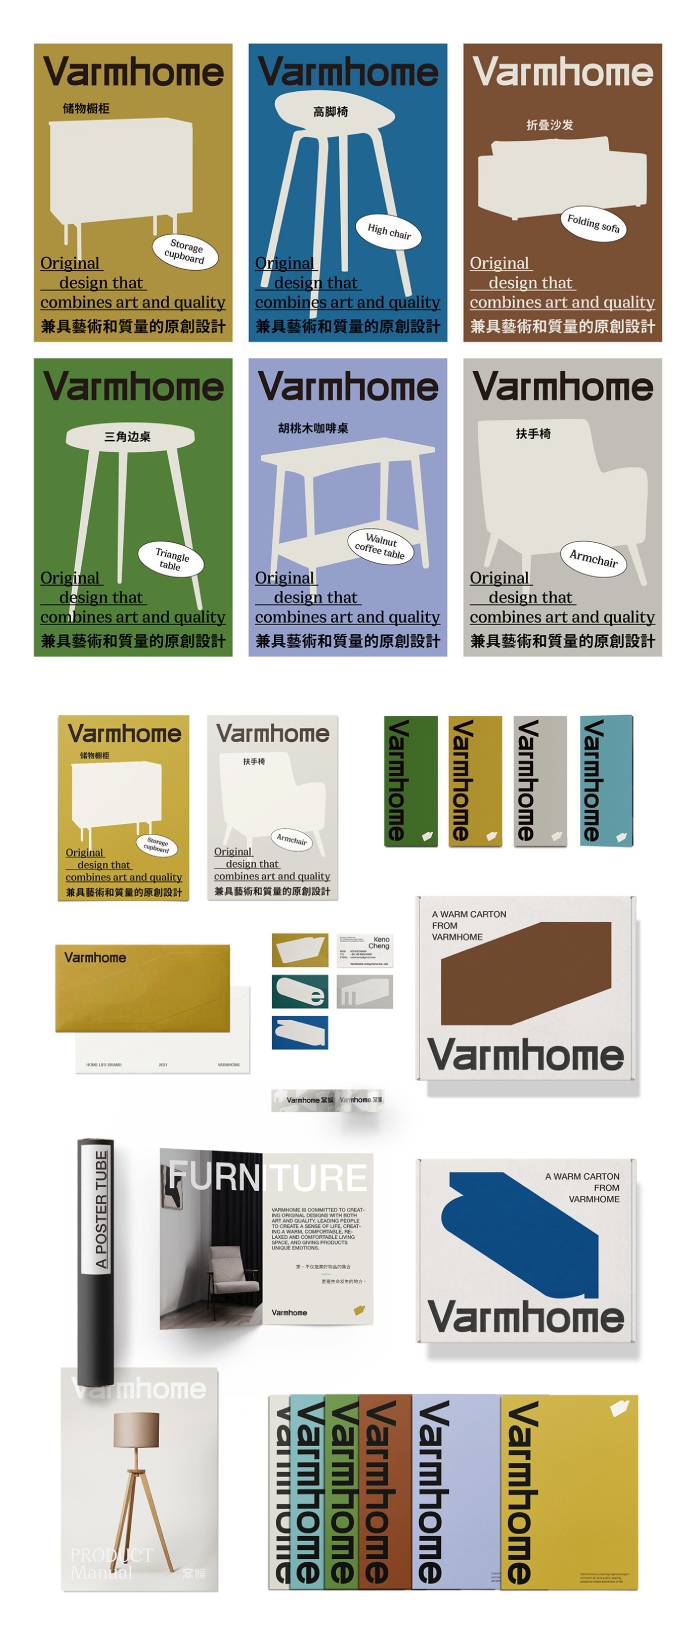 Varmhome Brand visual design by Canwei Lai 赖灿伟